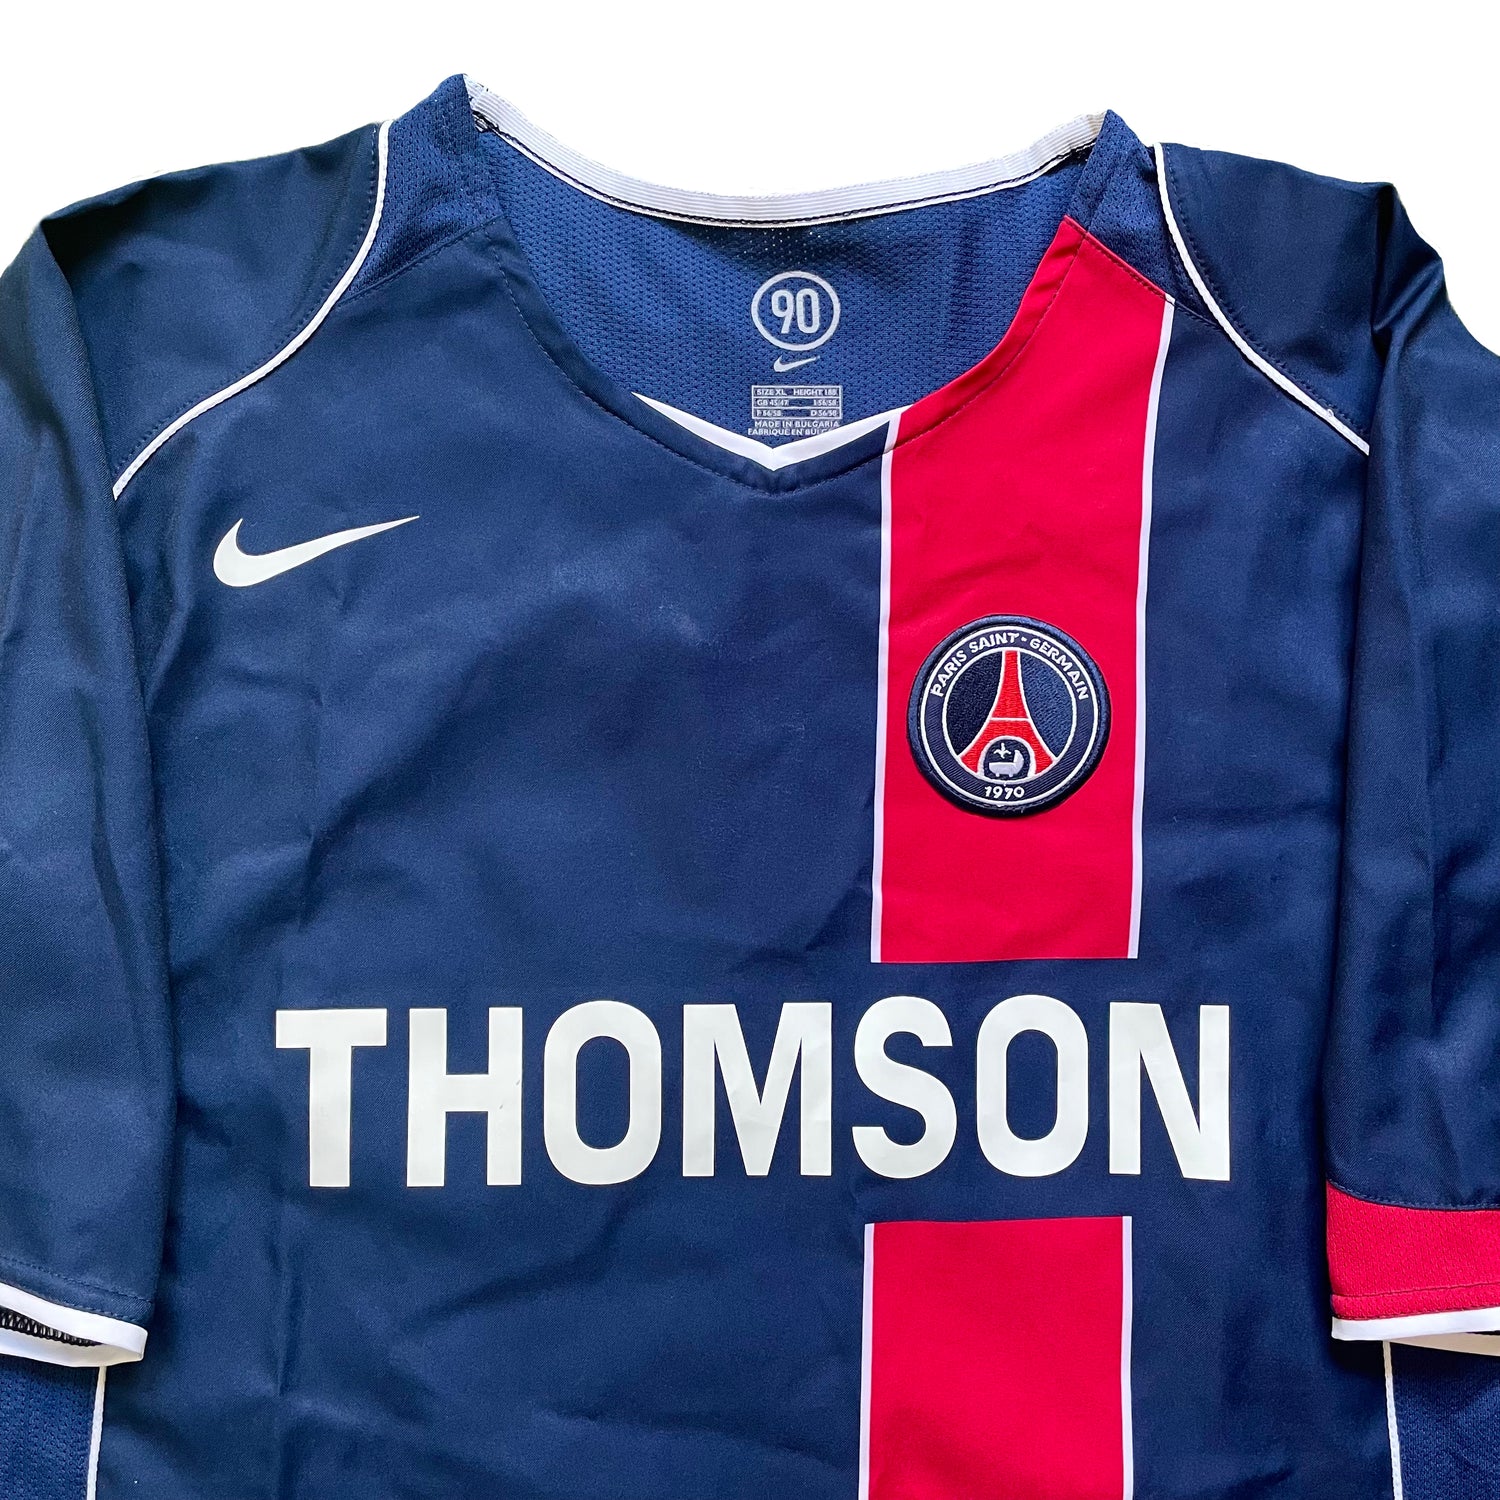 Paris Saint Germain 2004-2005 Home Shirt - Online Store From Footuni Japan